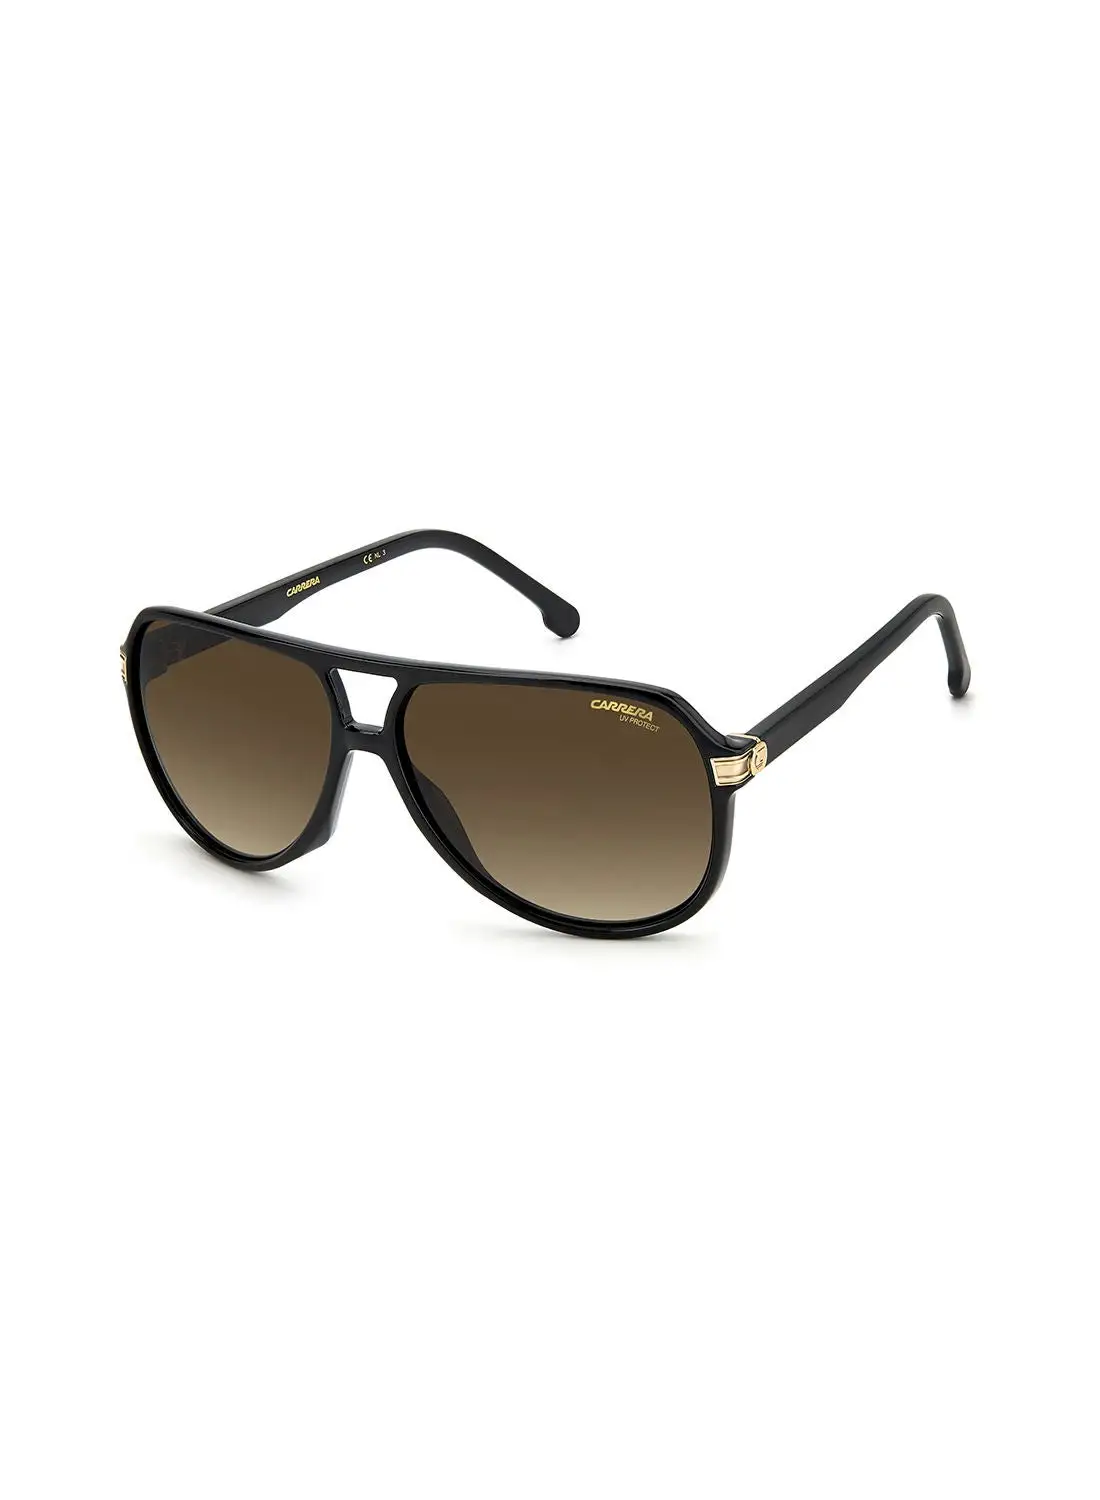 Carrera Unisex UV Protection Navigator Sunglasses - Carrera 1045/S Blk Gold 61 - Lens Size: 61 Mm